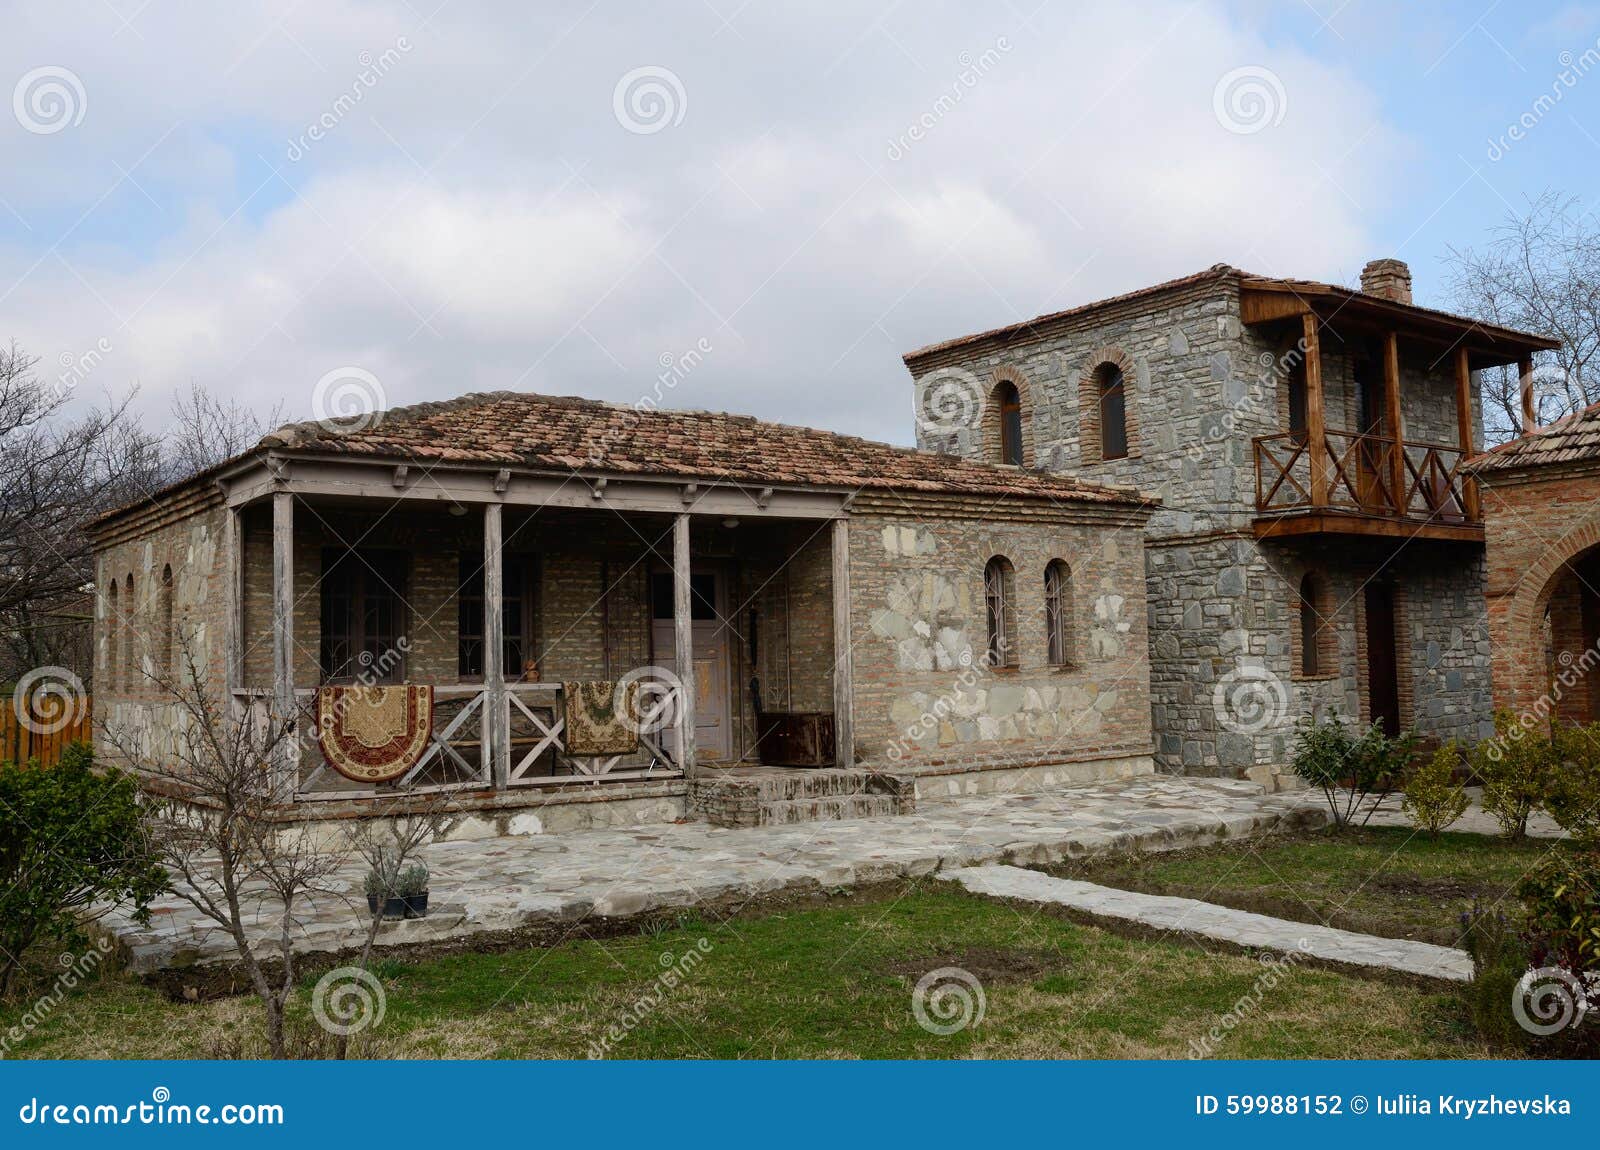 traditional georgian architecture in mtskheta,georgia